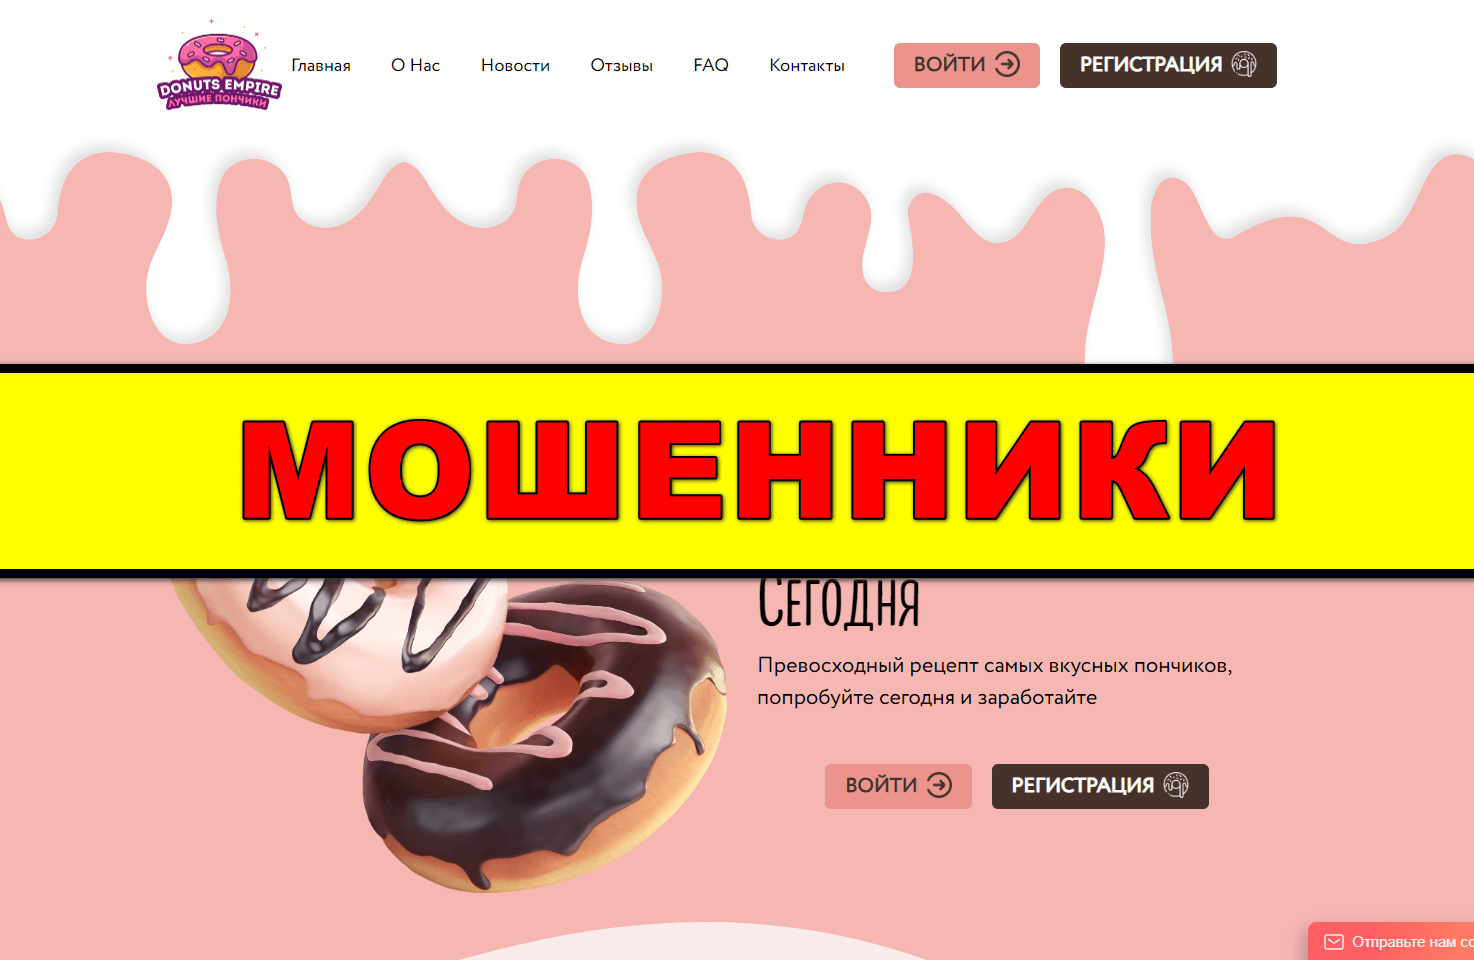 donutsempire.com